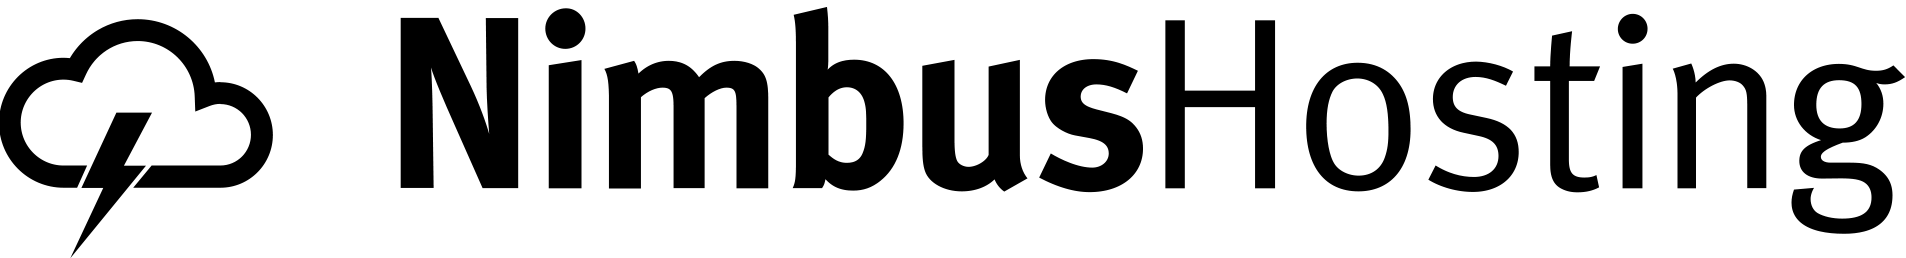 Nimbus Hosting Logo, Cre8ion